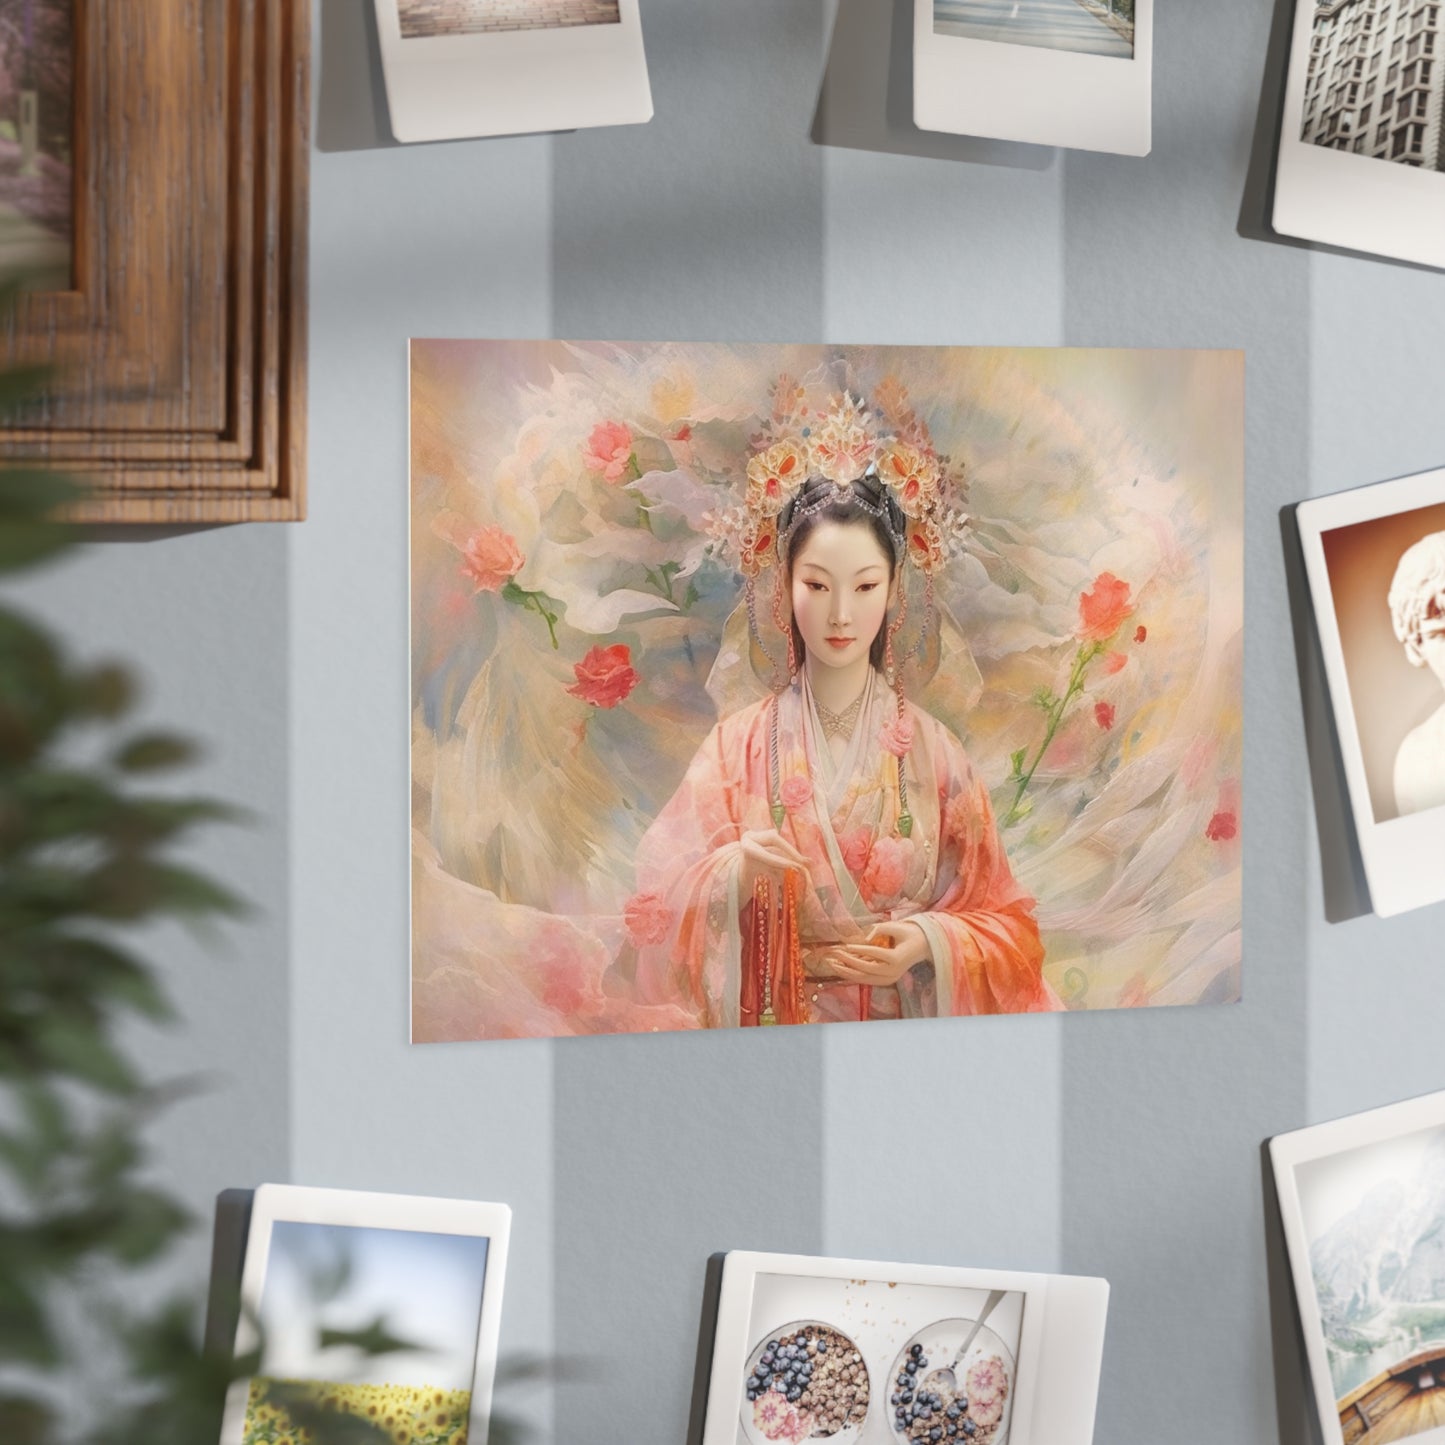 Quan Yin Poster - Goddess of Compassion, Spiritual Art Print, Guan Yin Wall Decor Paper products 7" x 5" (Horizontal) Glossy 